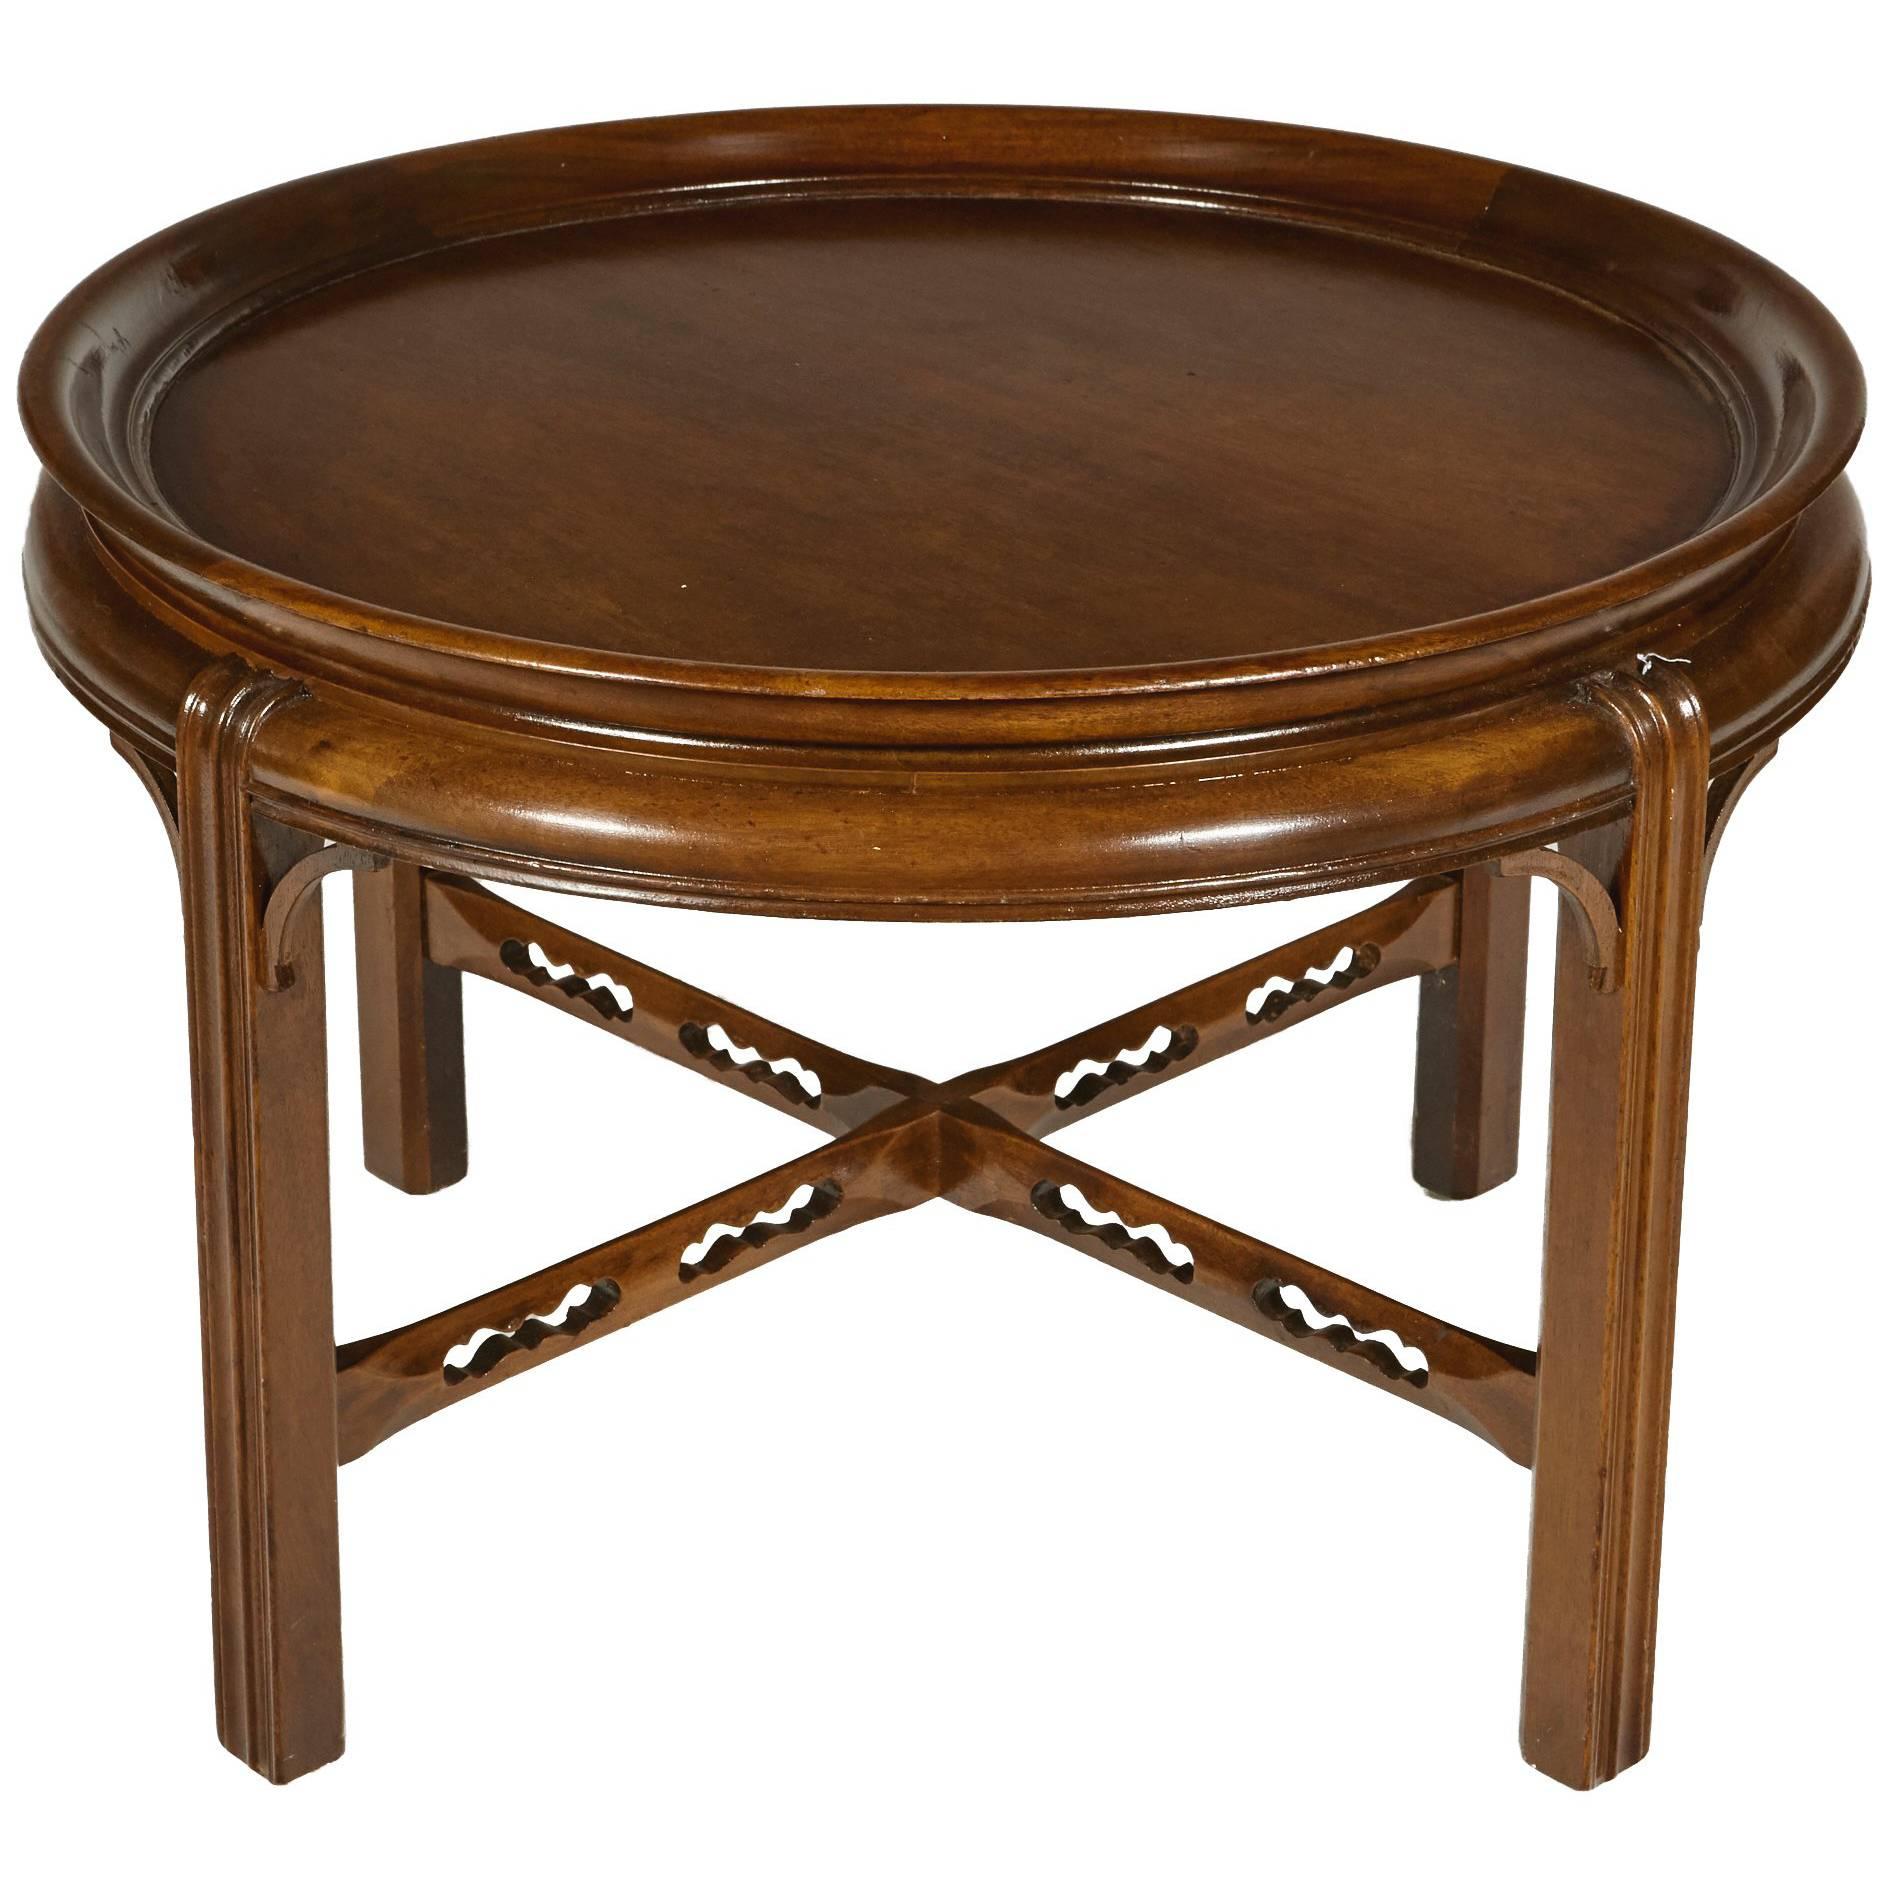 Mahogany Round Side Table by Berkey & Gay Furniture Co